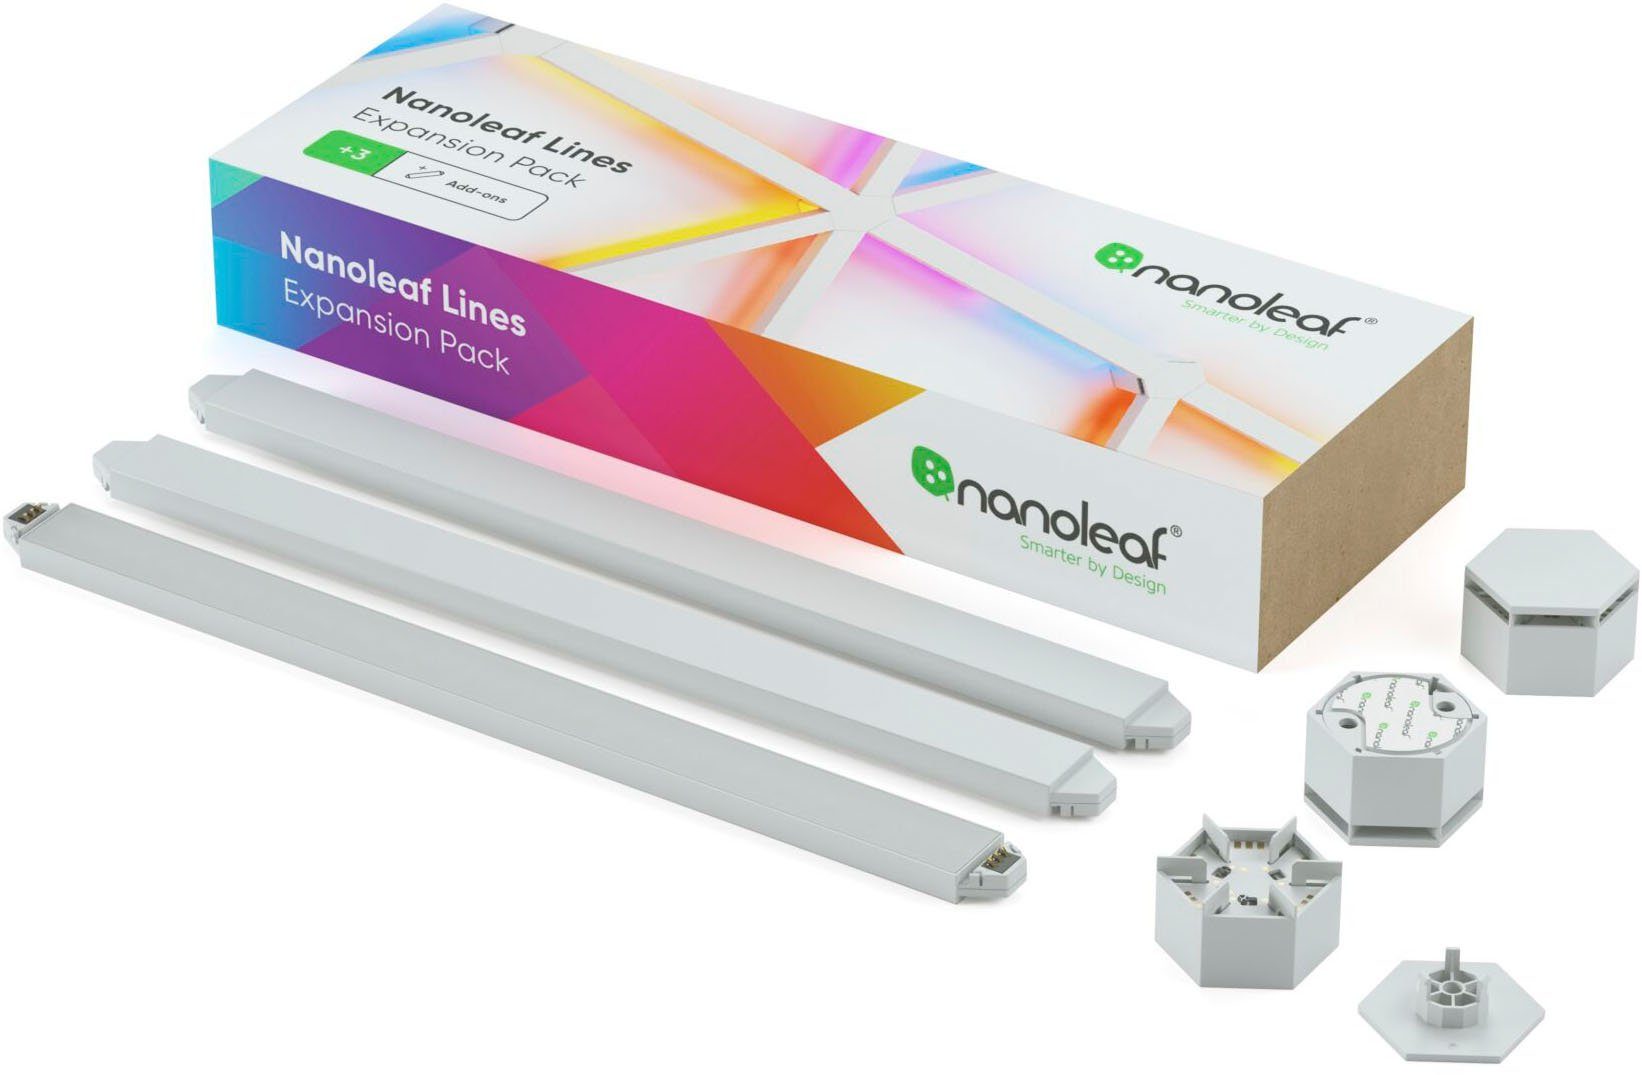 Dimmfunktion, Lines, elegante Beleuchtung LED Technologie und integriert, LED Farbwechsler, fest Smarte nanoleaf Lichtleiste